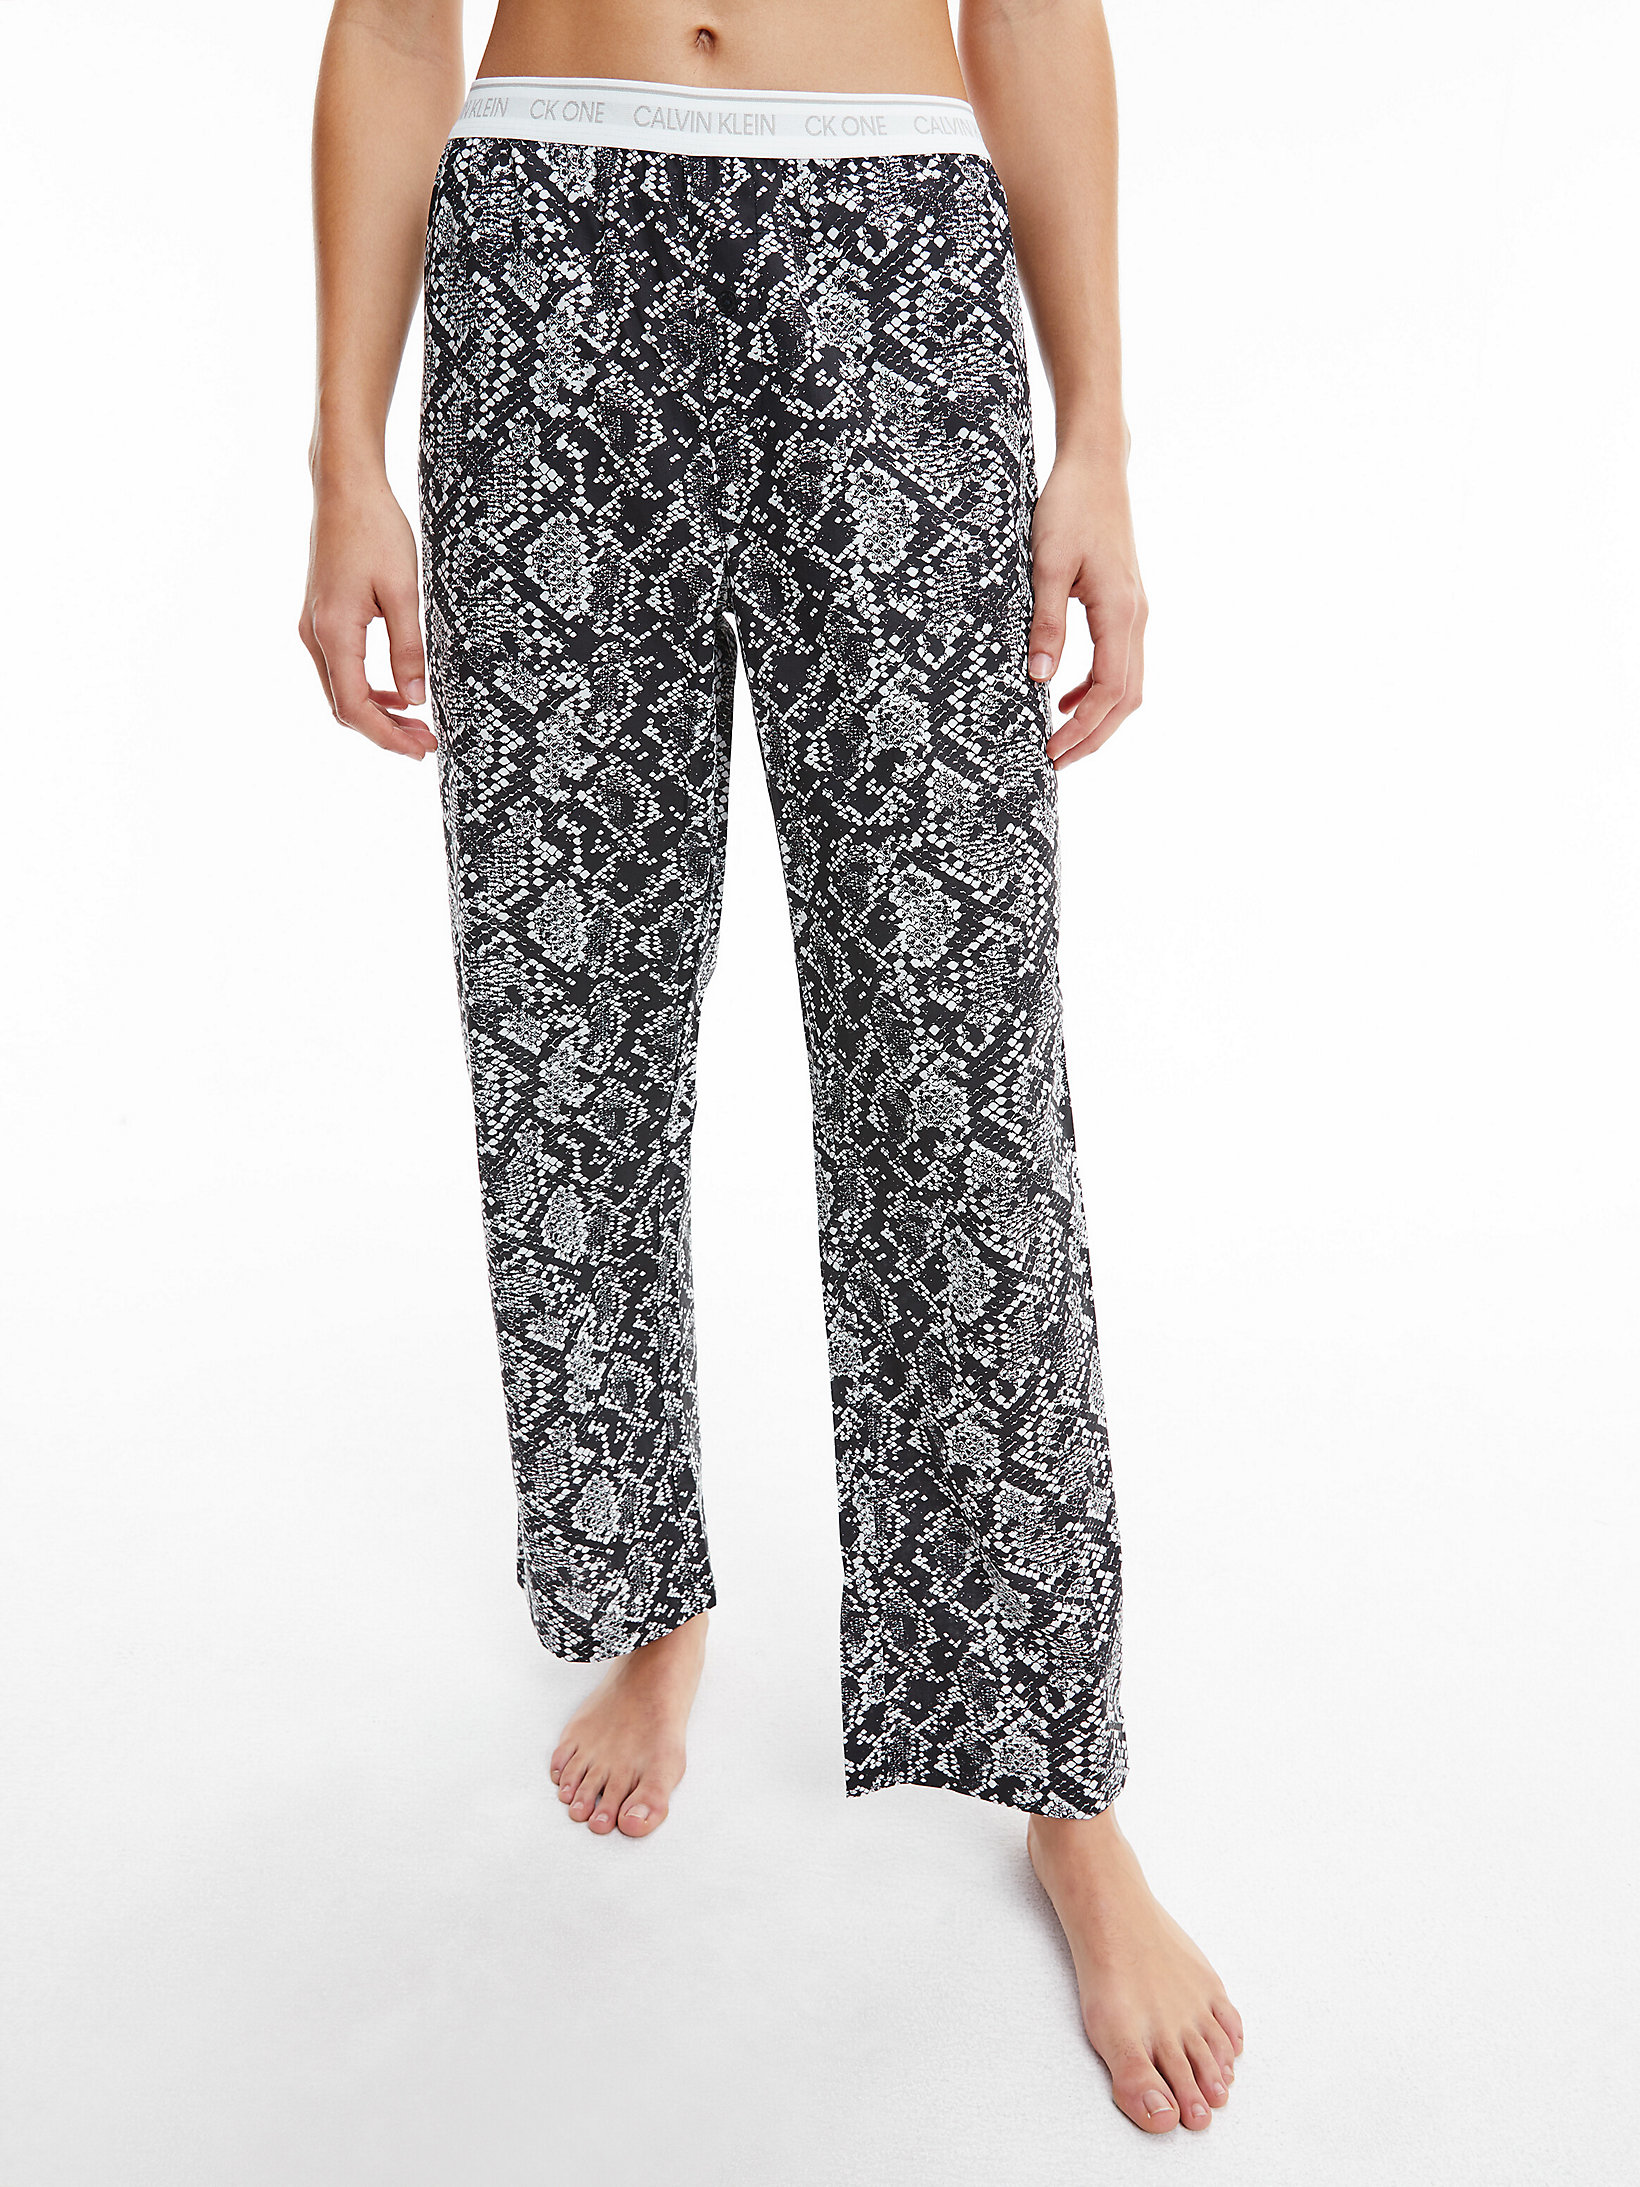 Rattlesnake Print_black > Pyjama-Hose – CK One > undefined Damen - Calvin Klein